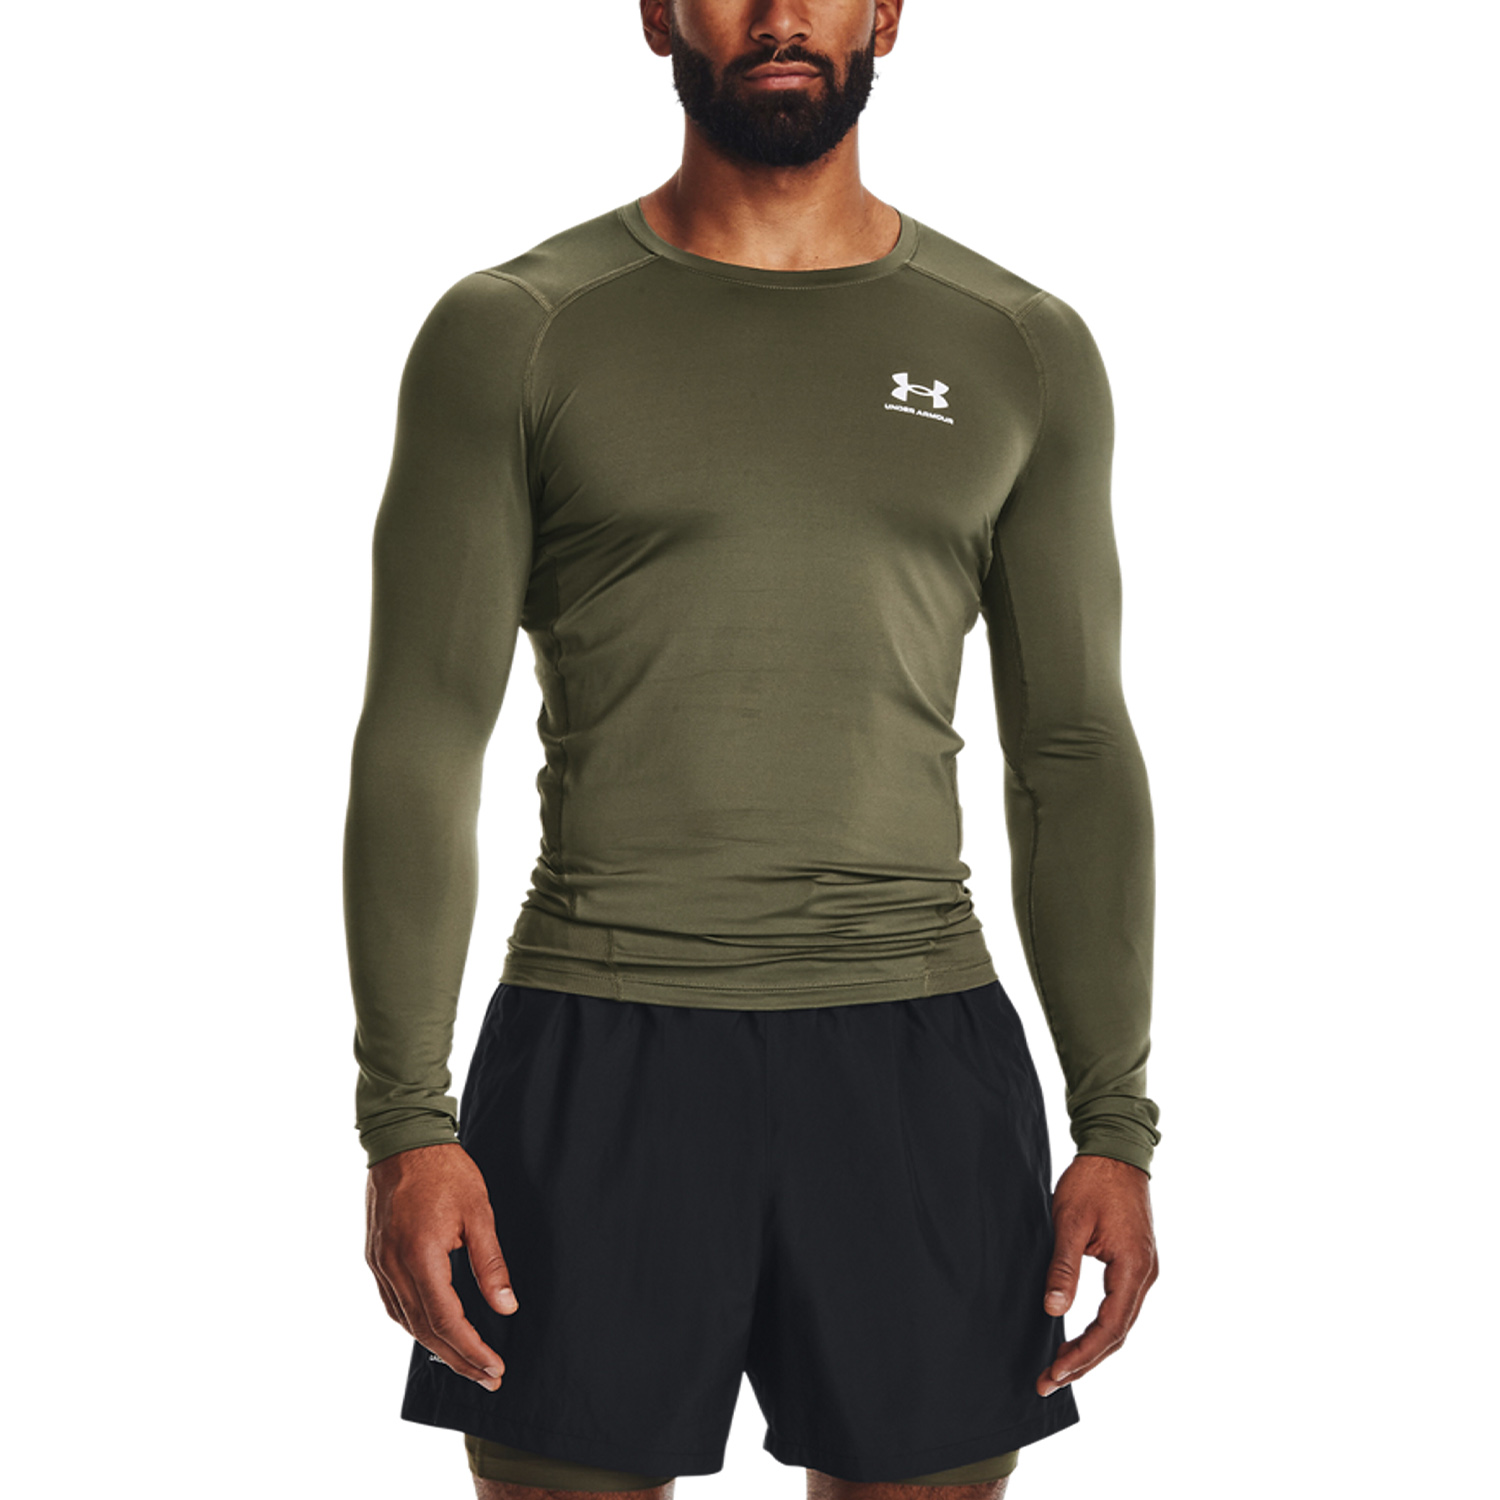 Under Armour HeatGear Men's Training Shirt - Marine OD Green